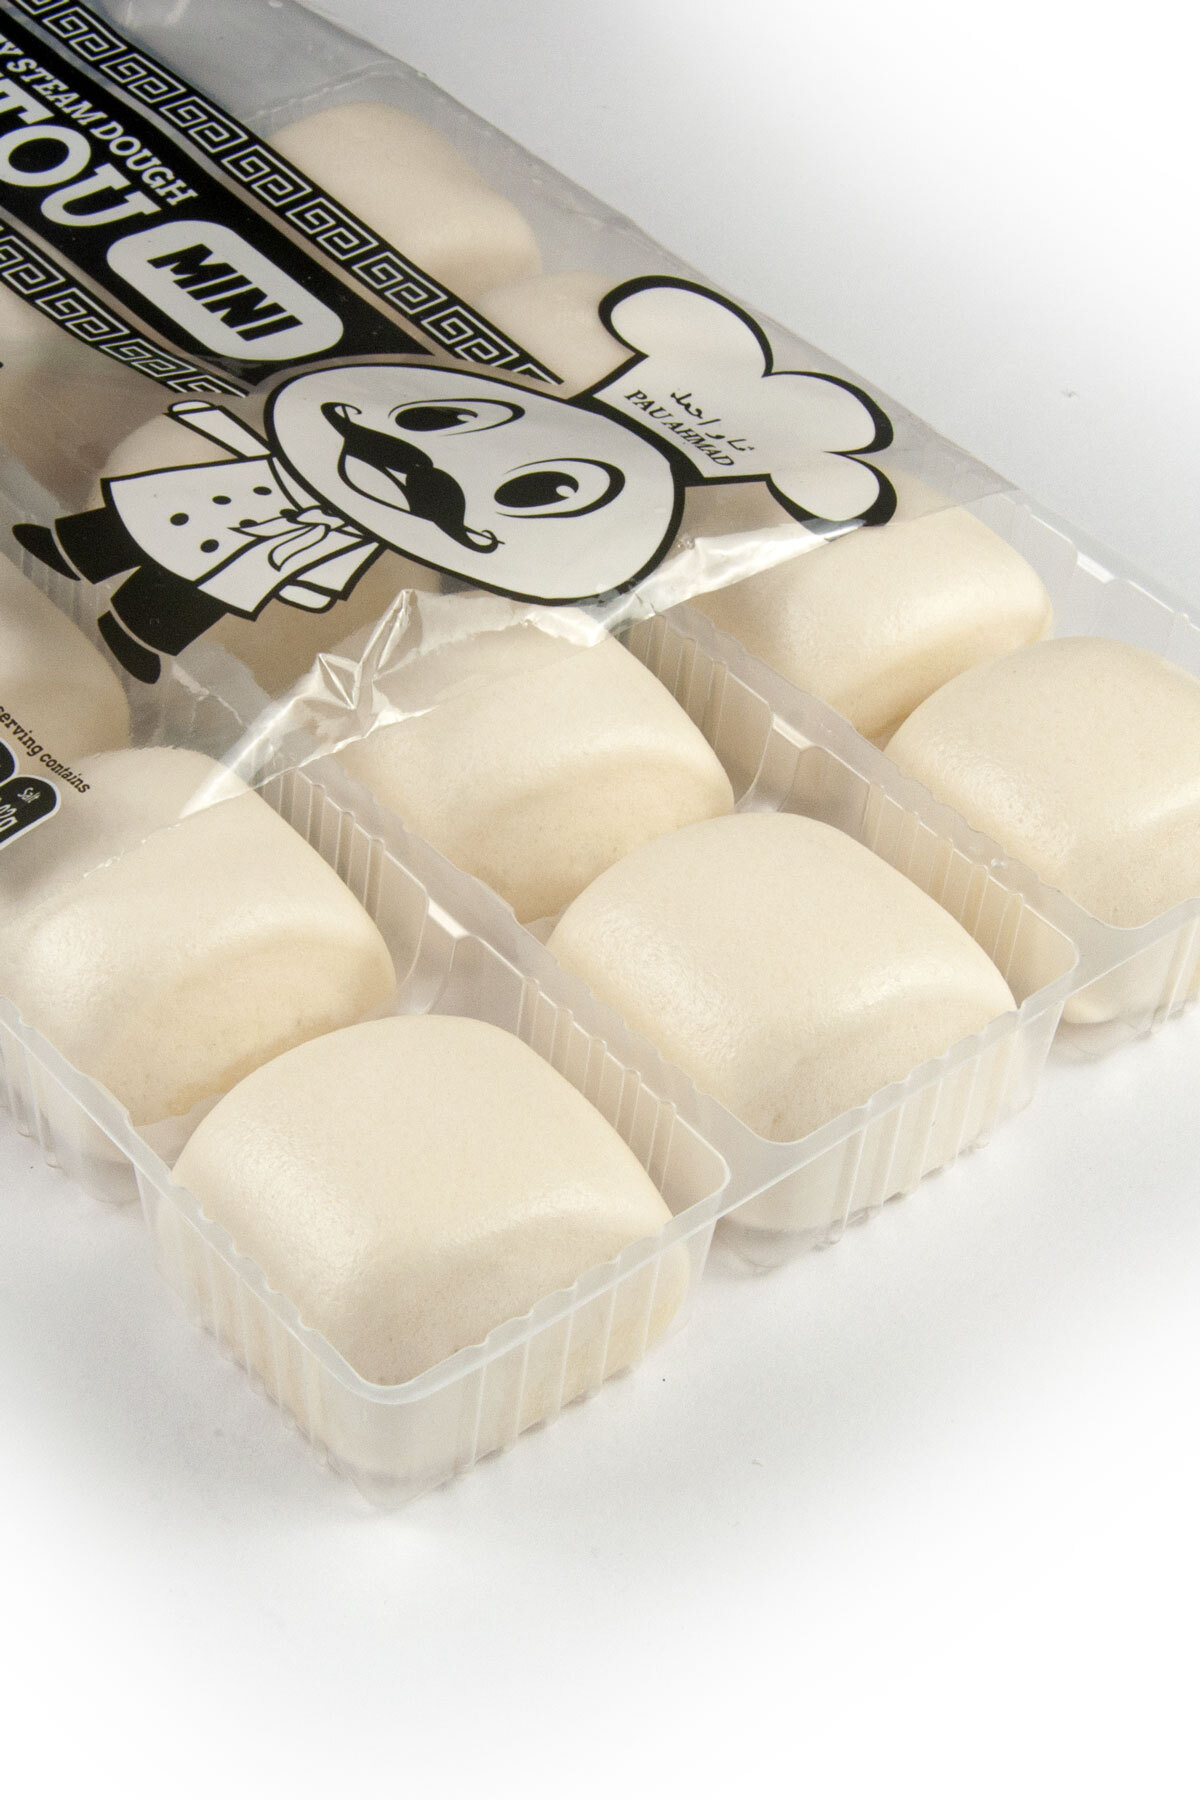 mini-mantou-plain-packaging-open